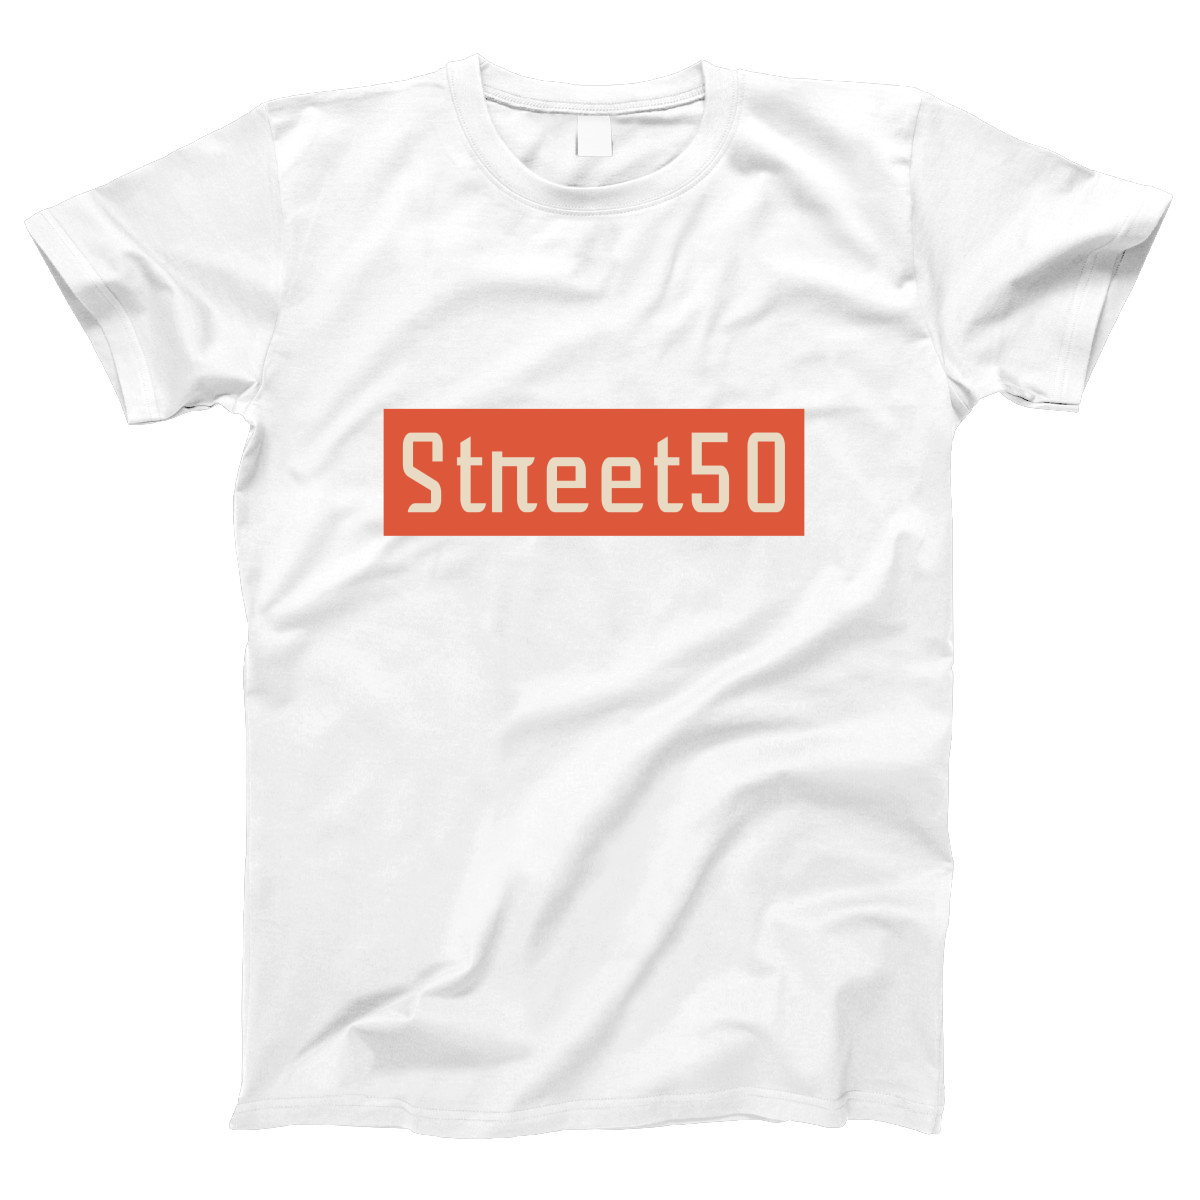 Cool 50 Women's T-shirt